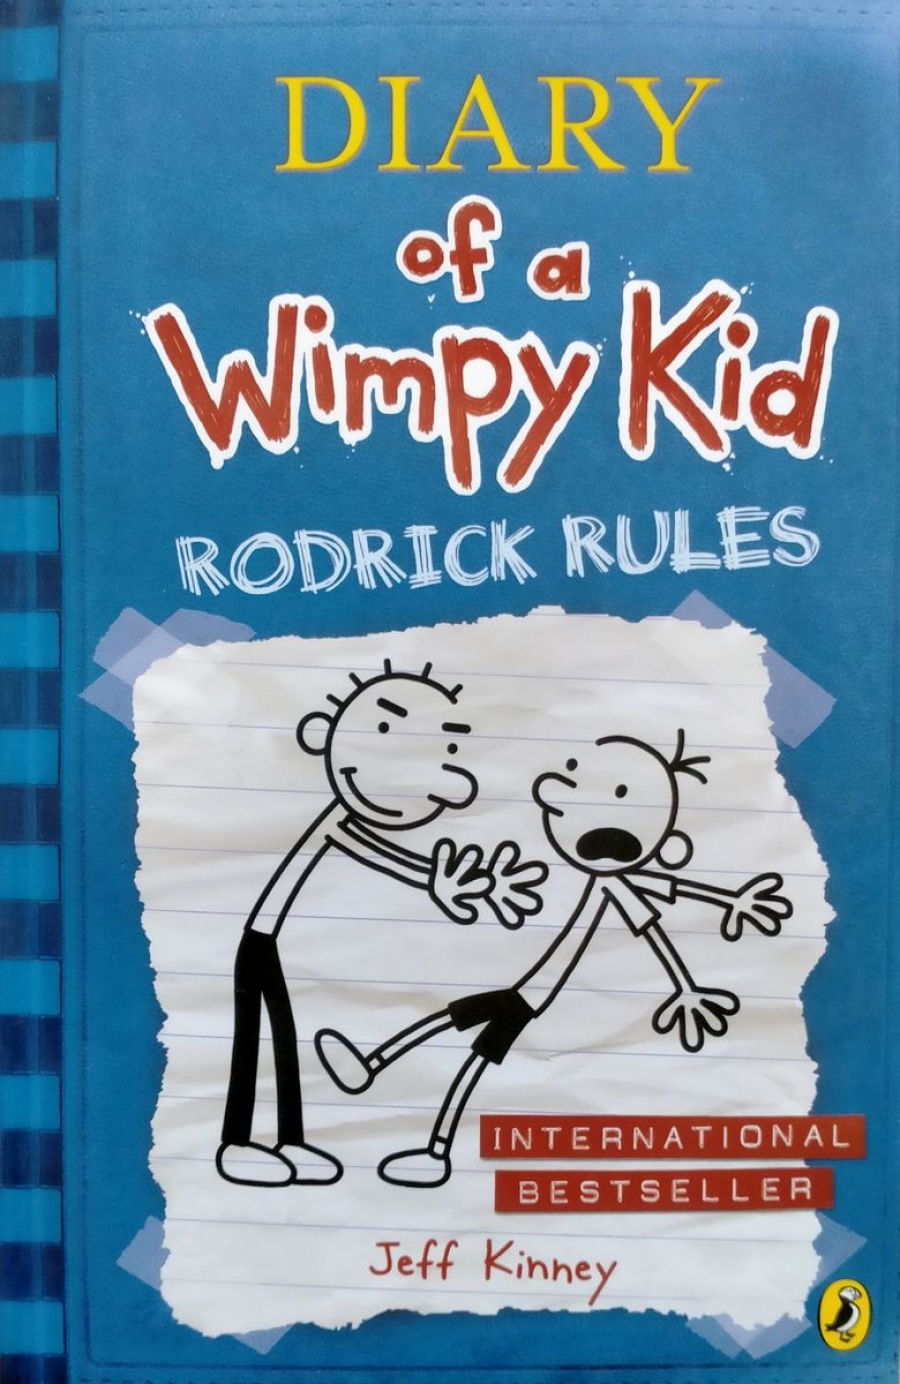 Jeff K. Diary of a Wimpy Kid: Rodrick Rules 